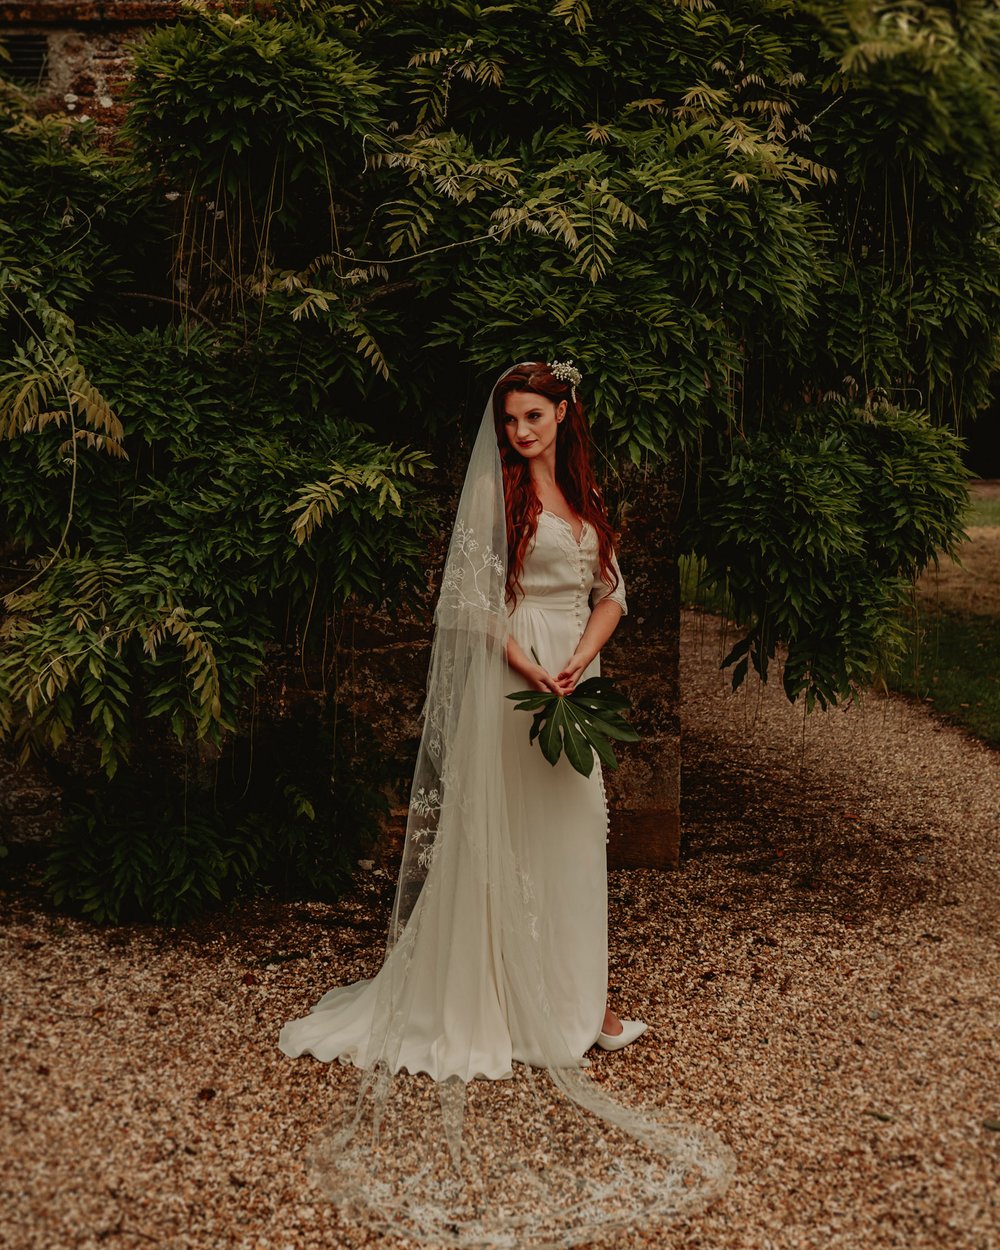 Daisy-Sheldon-Embroidered-Veils-Kate-Beaumont-Wedding-Dresses-Lou-White-Photography-16.jpg